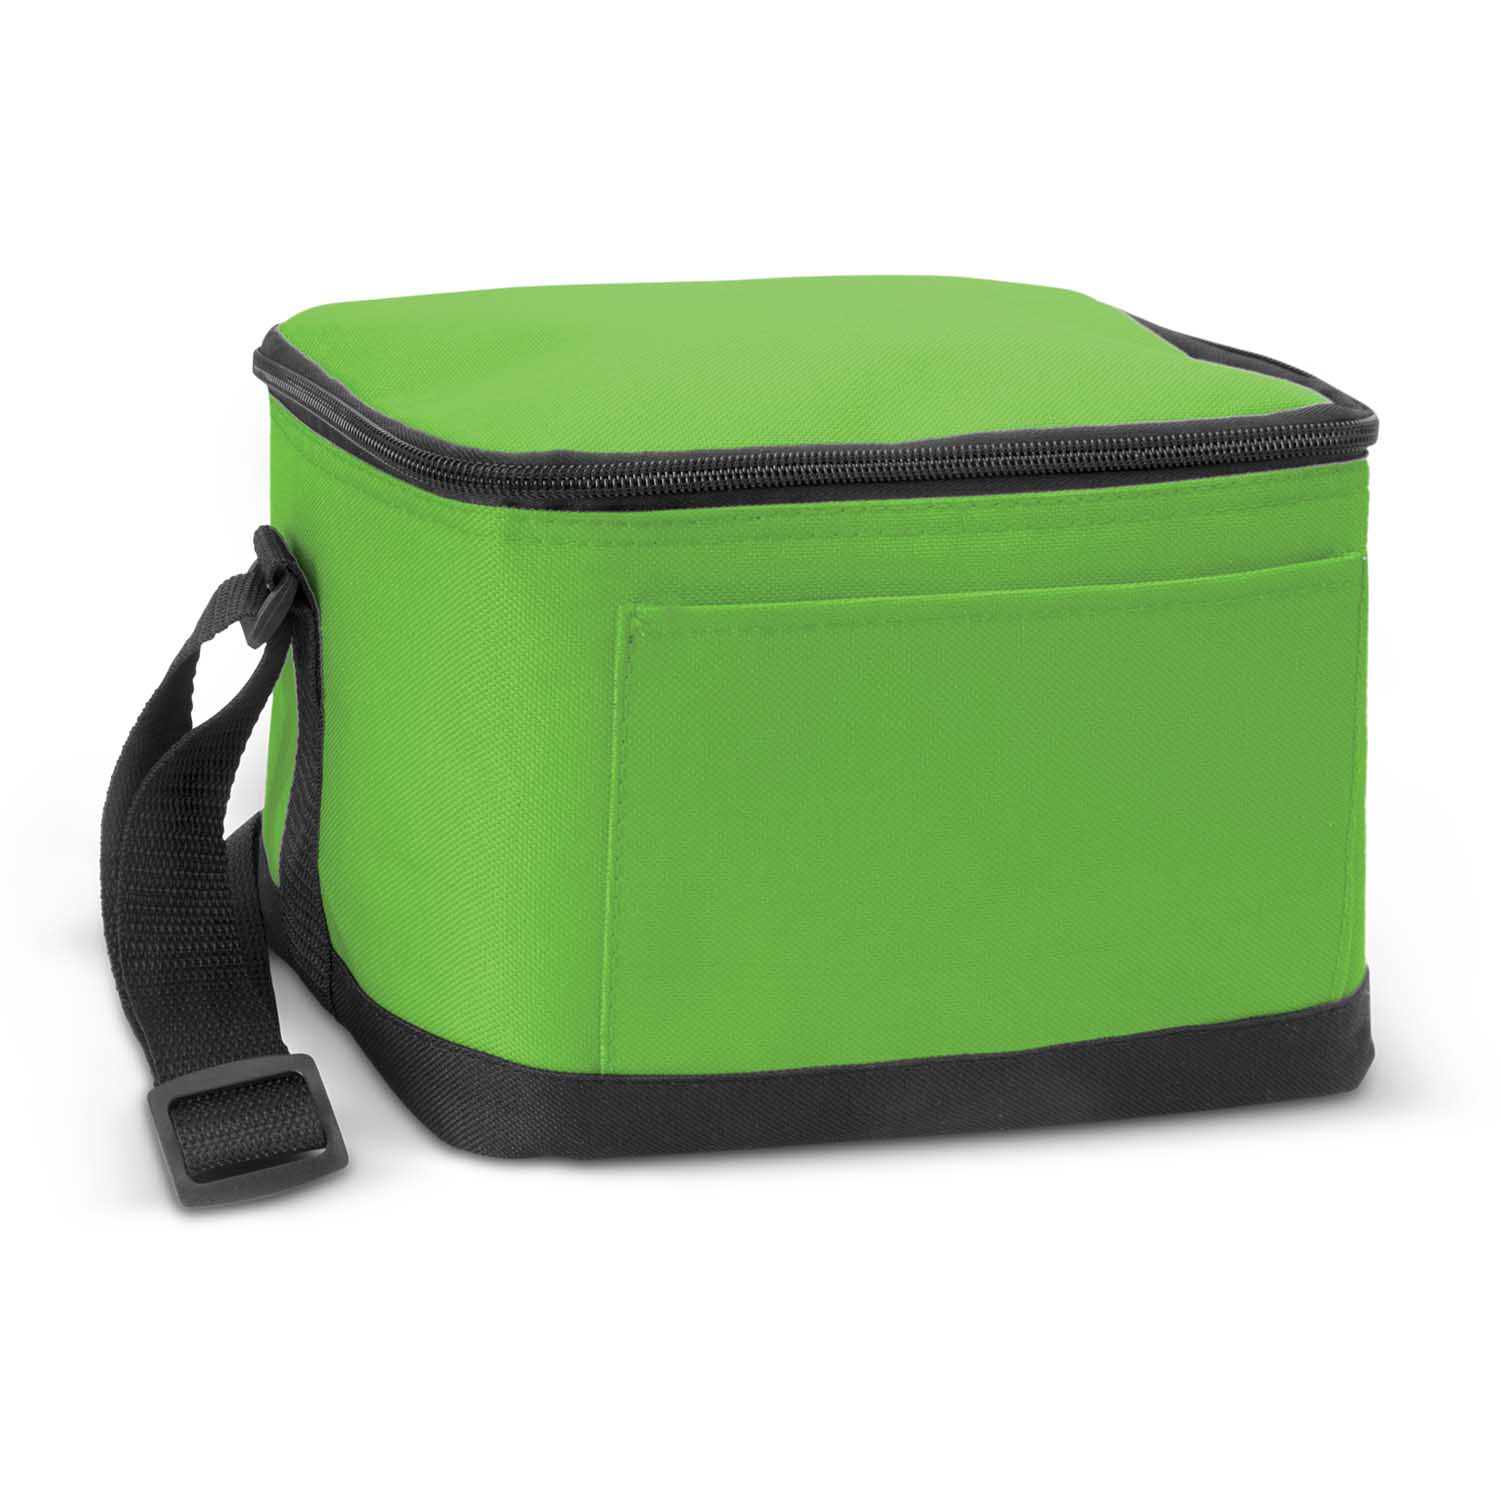 Get Green Bathurst Cooler Bags Online in Perth